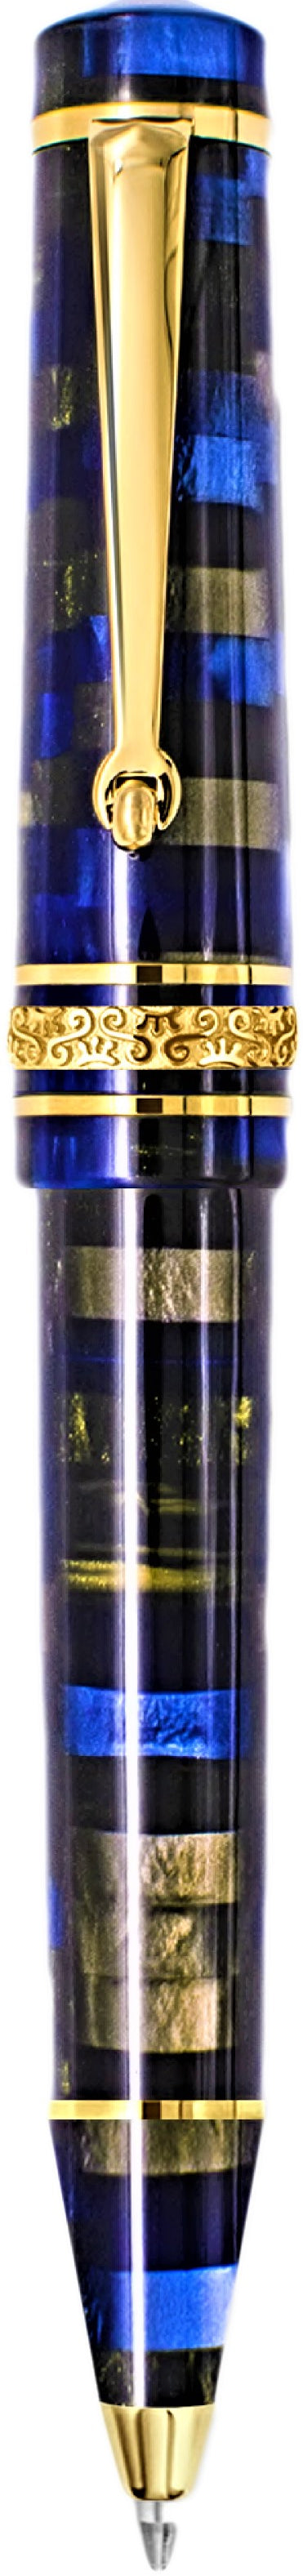 Maiora Alpha Oroblu GT Ballpoint Pen